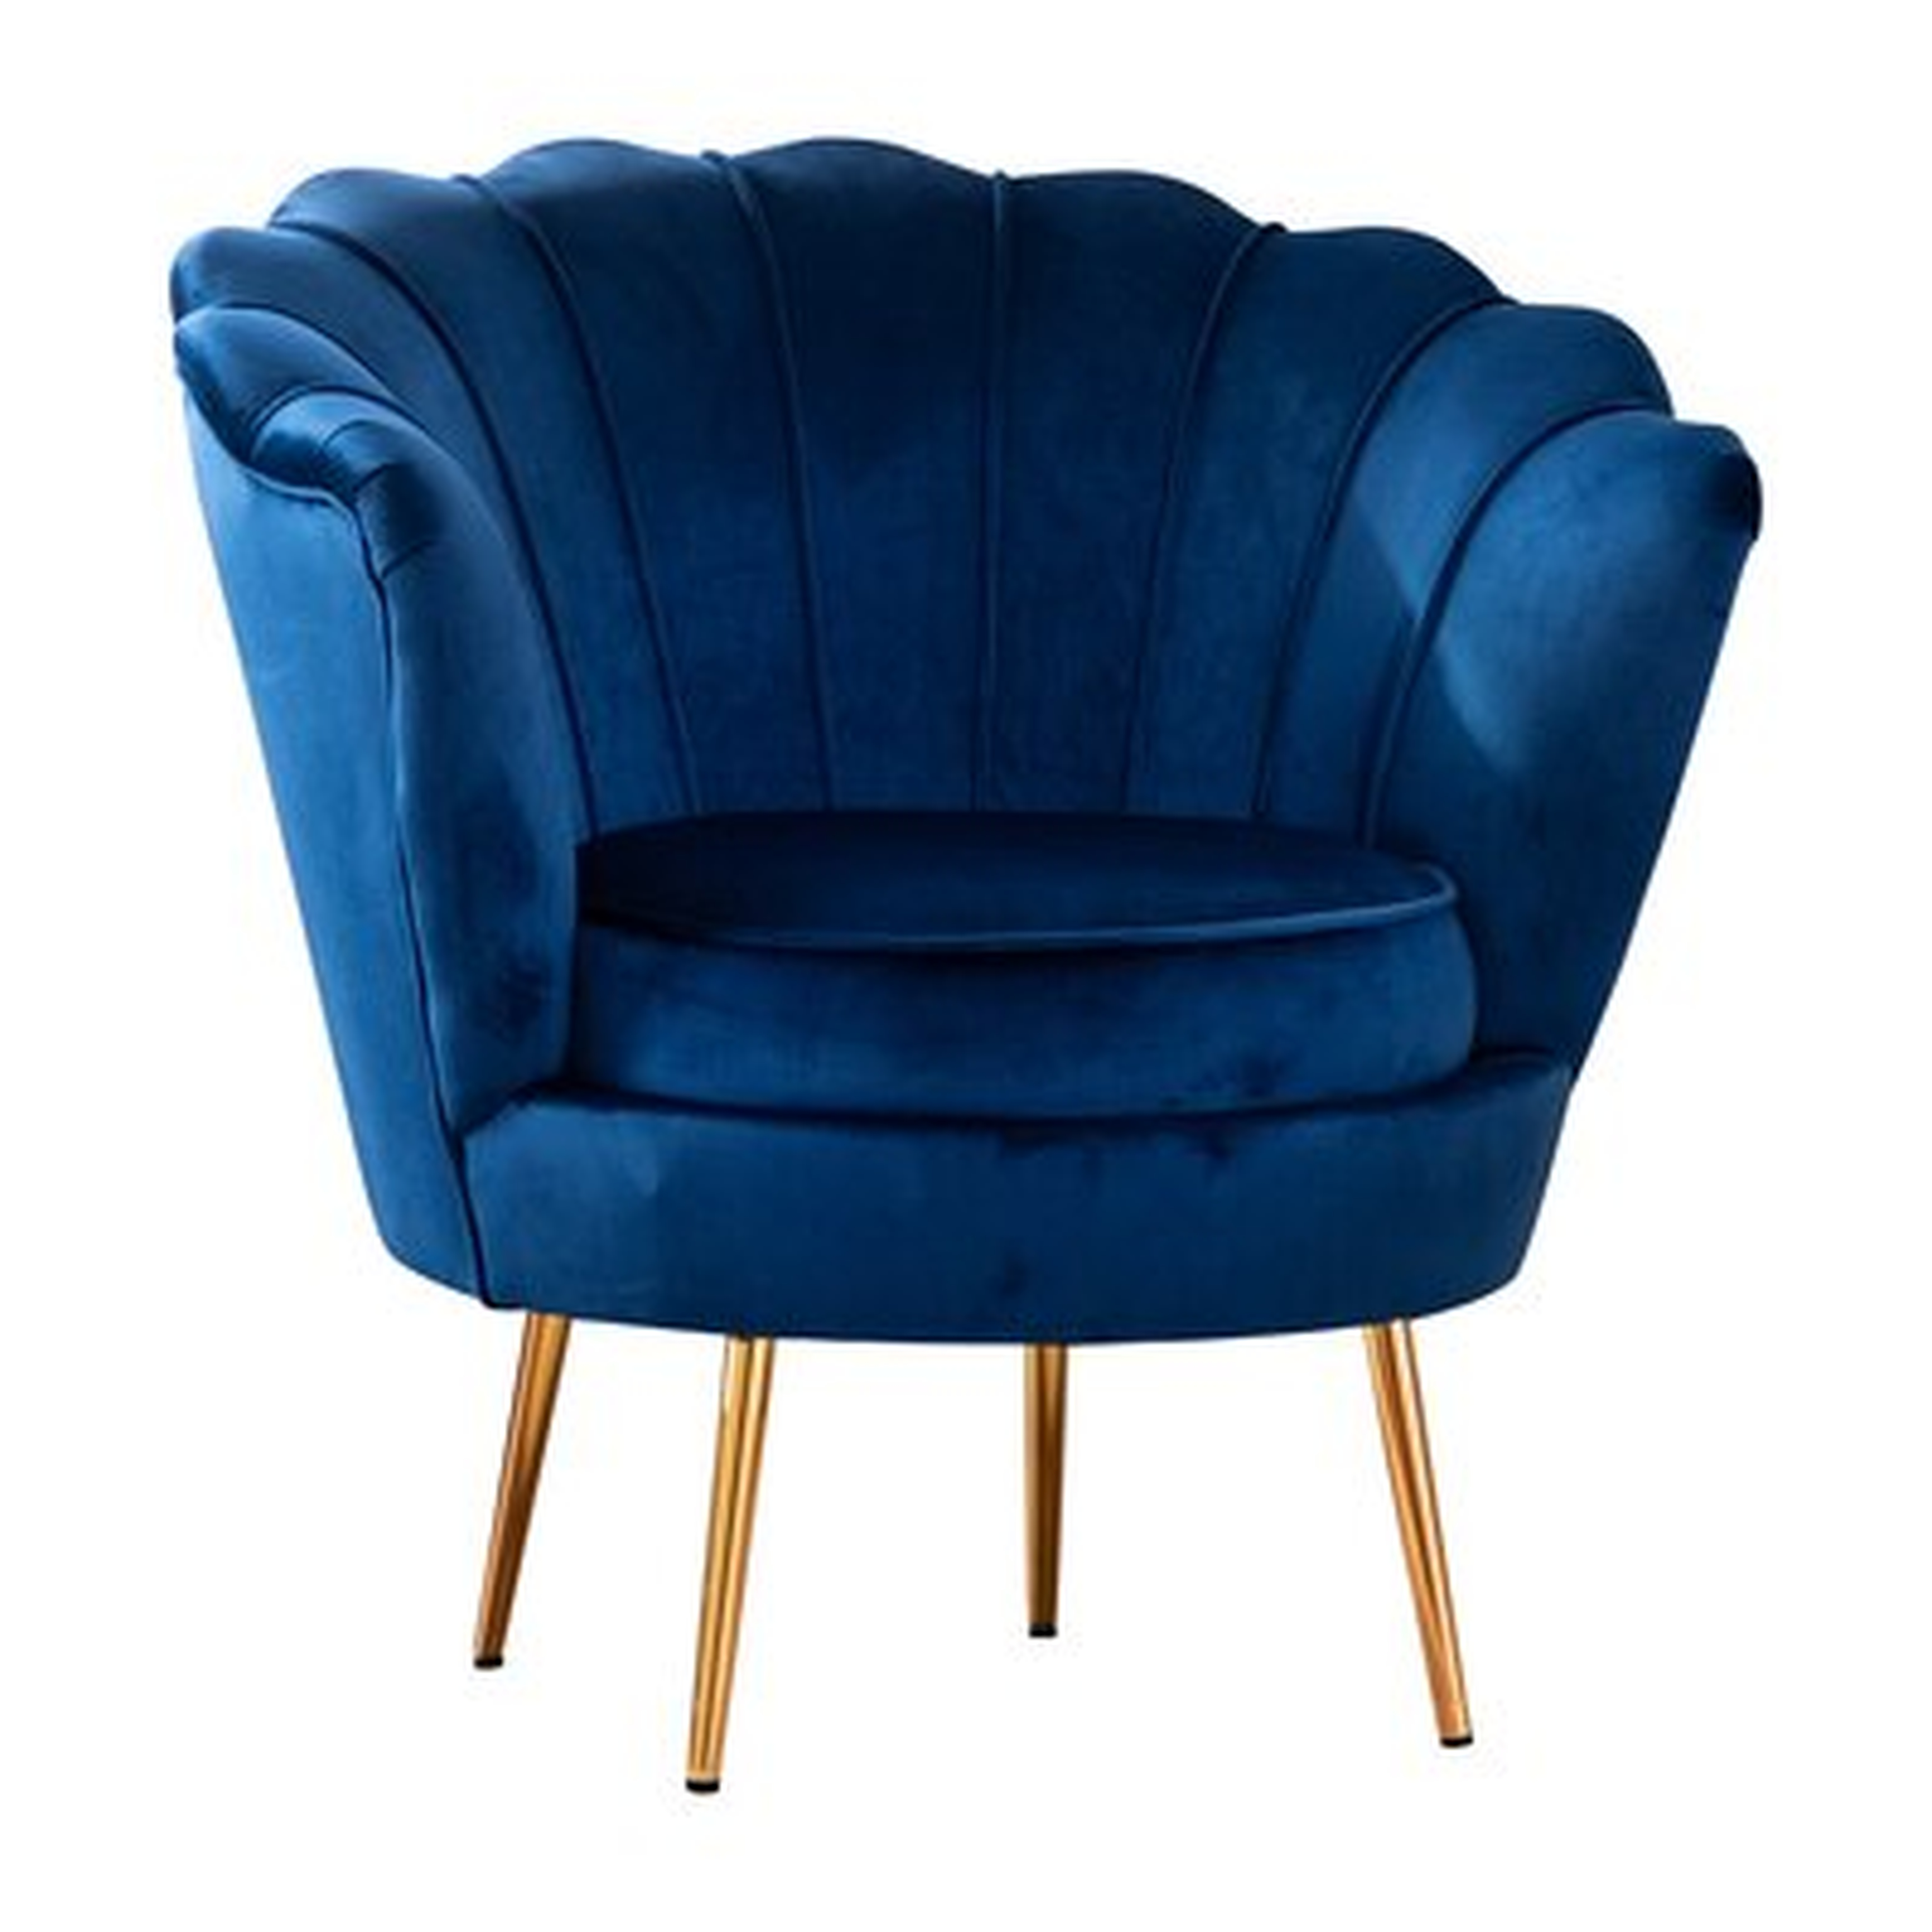 Raelynn Upholstered Barrel Chair - Wayfair